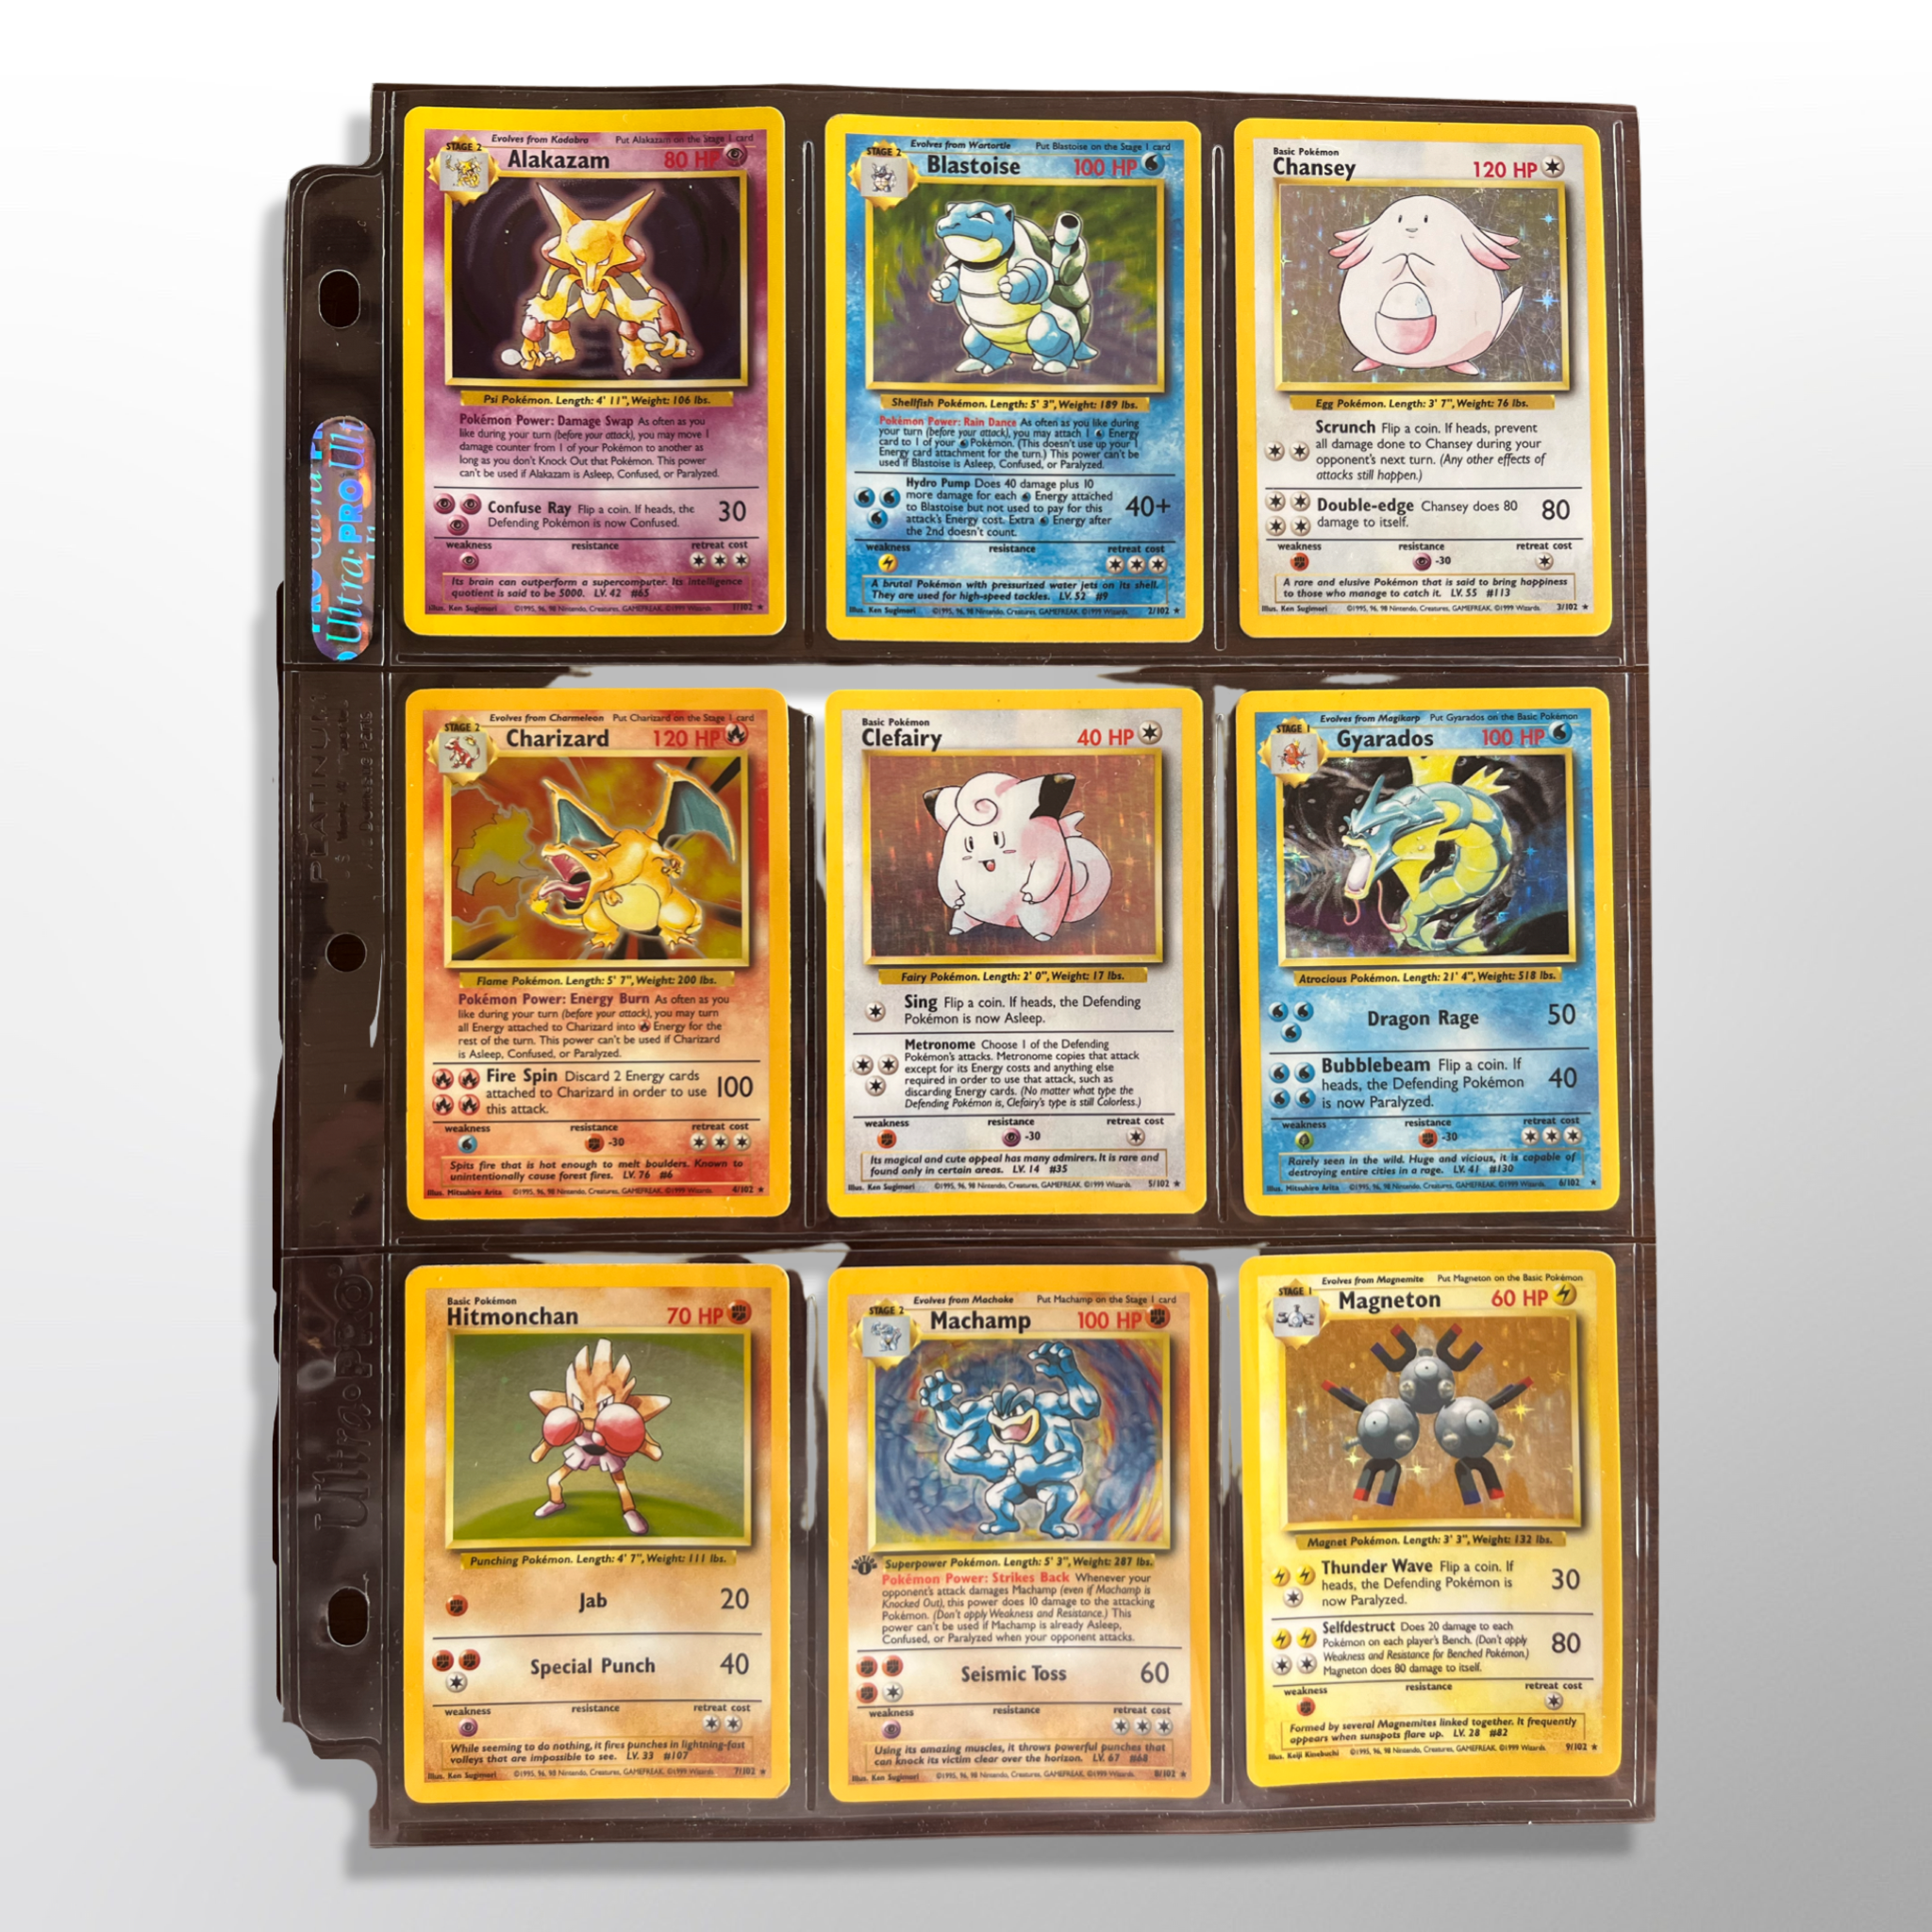 Pokemon Card - Farfetch'd - (27/102) Base Set Uncommon MP